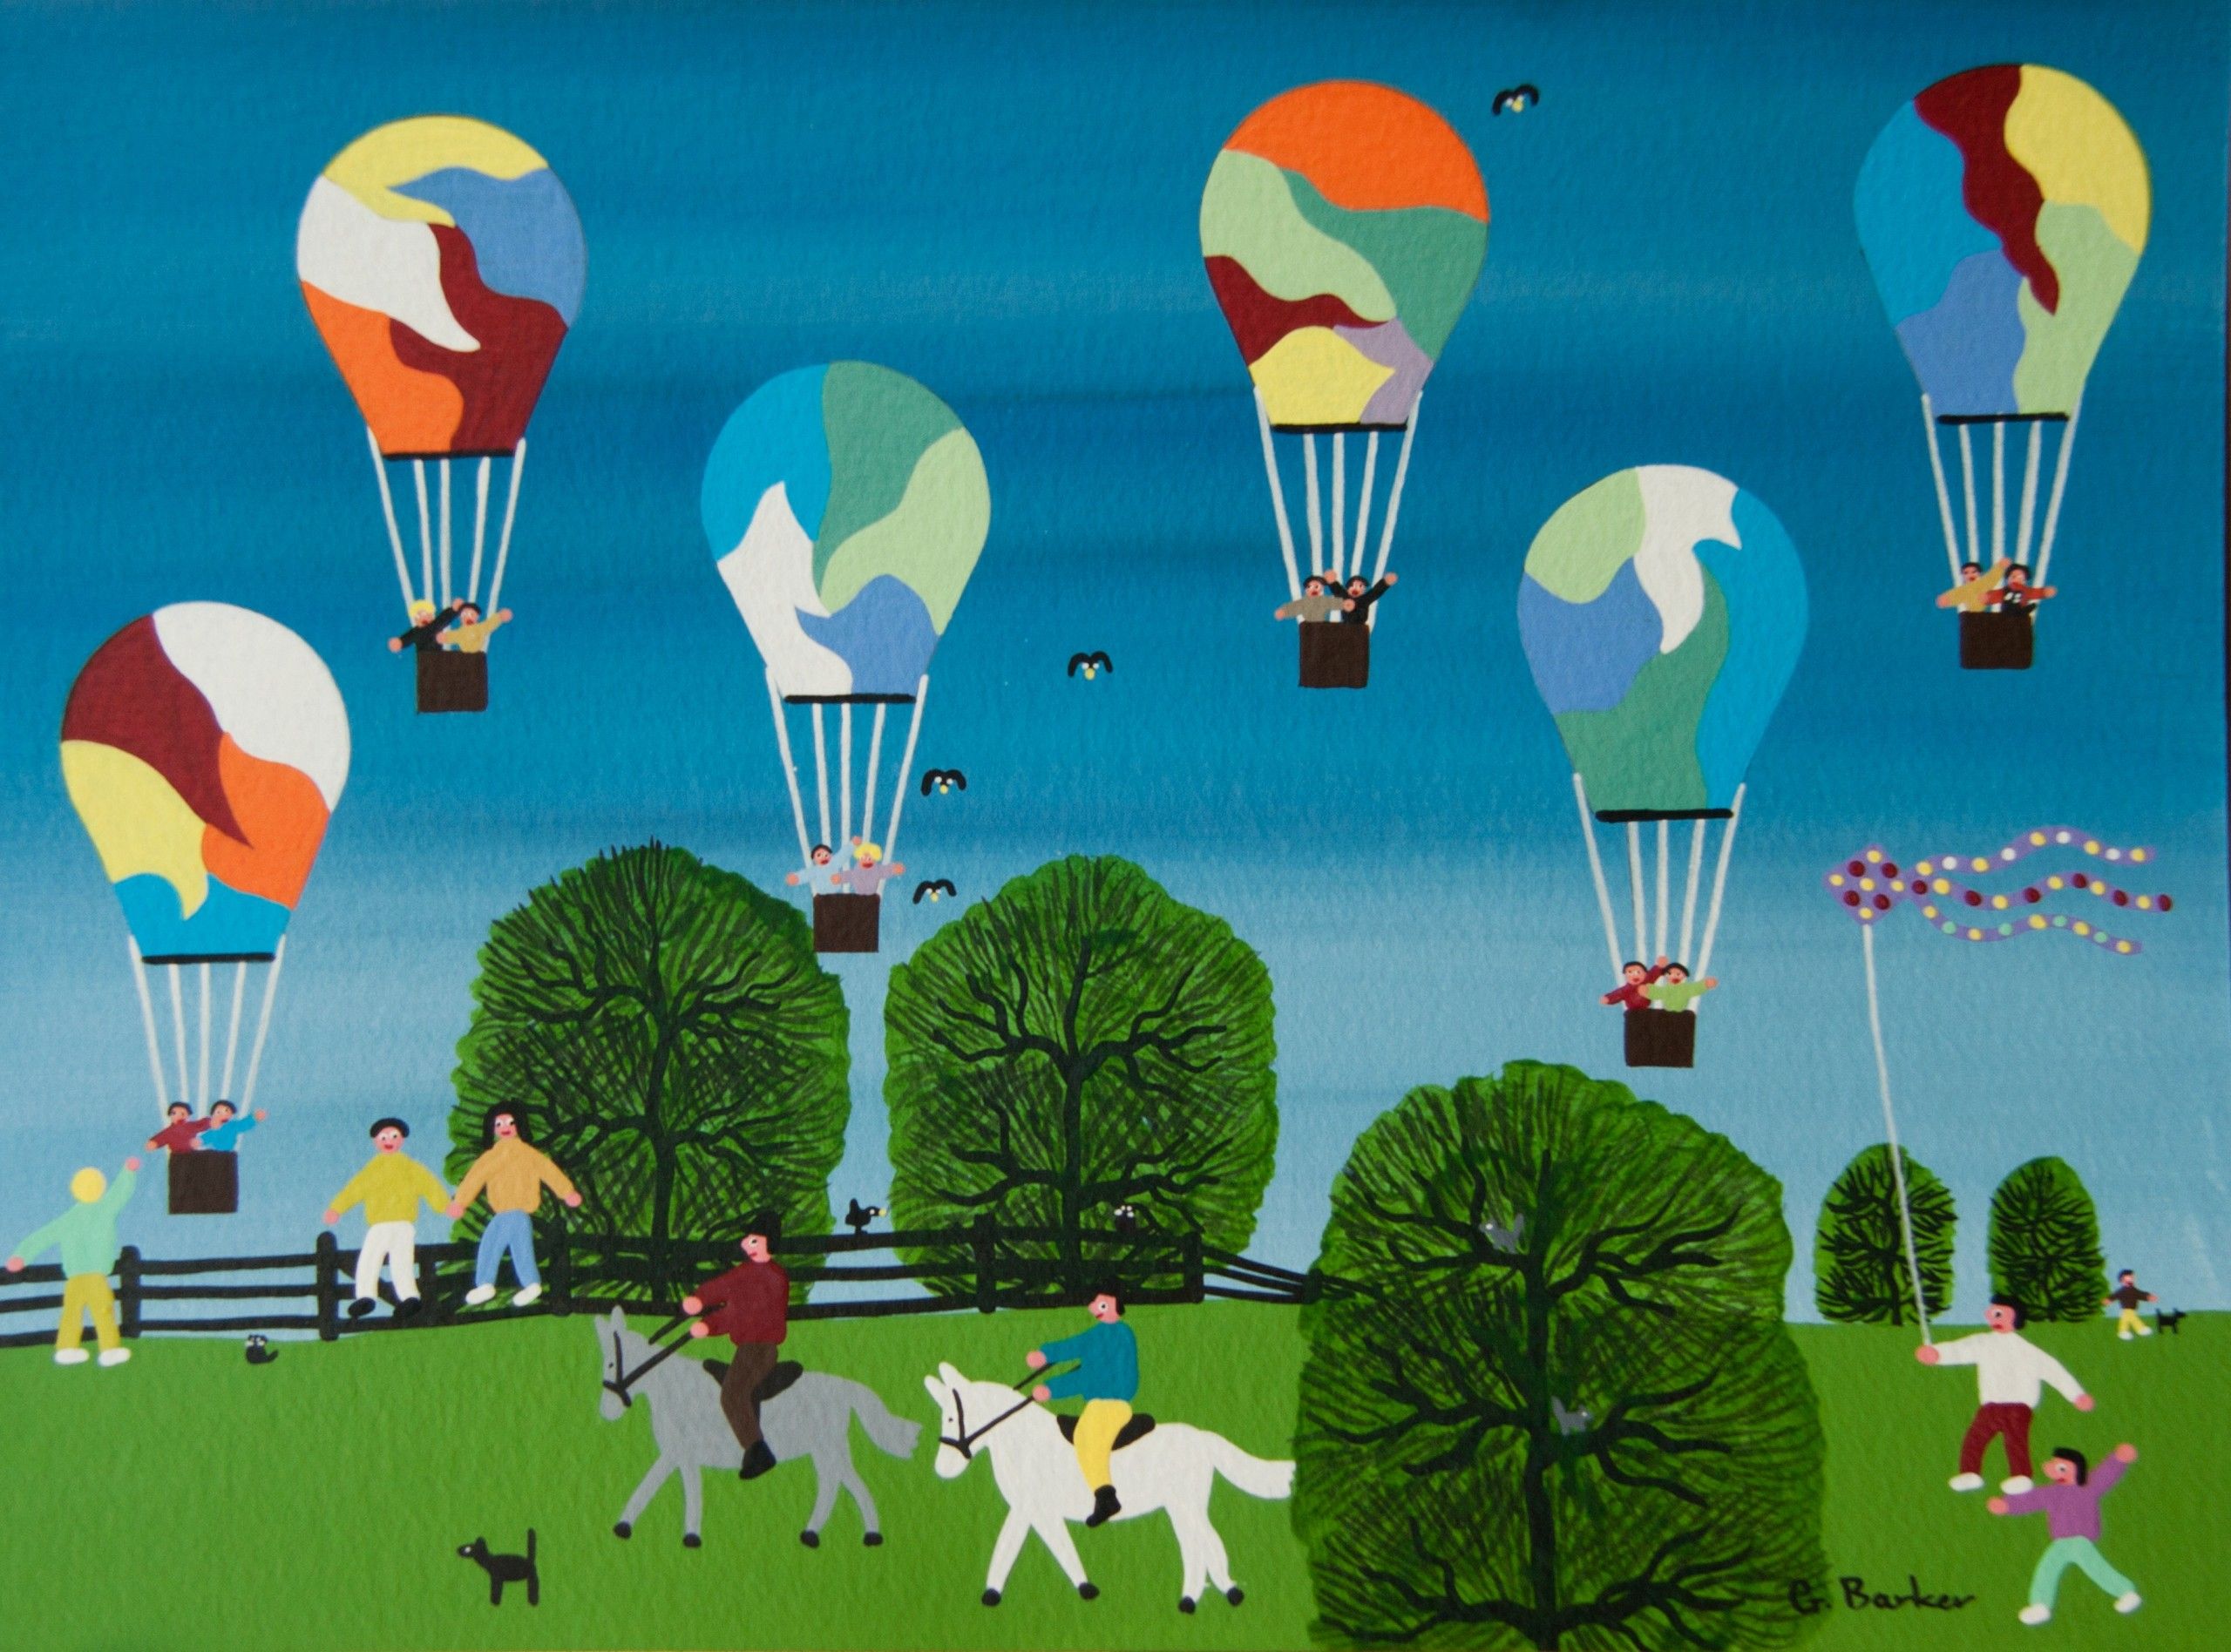 Balloons over the park by Gordon Barker